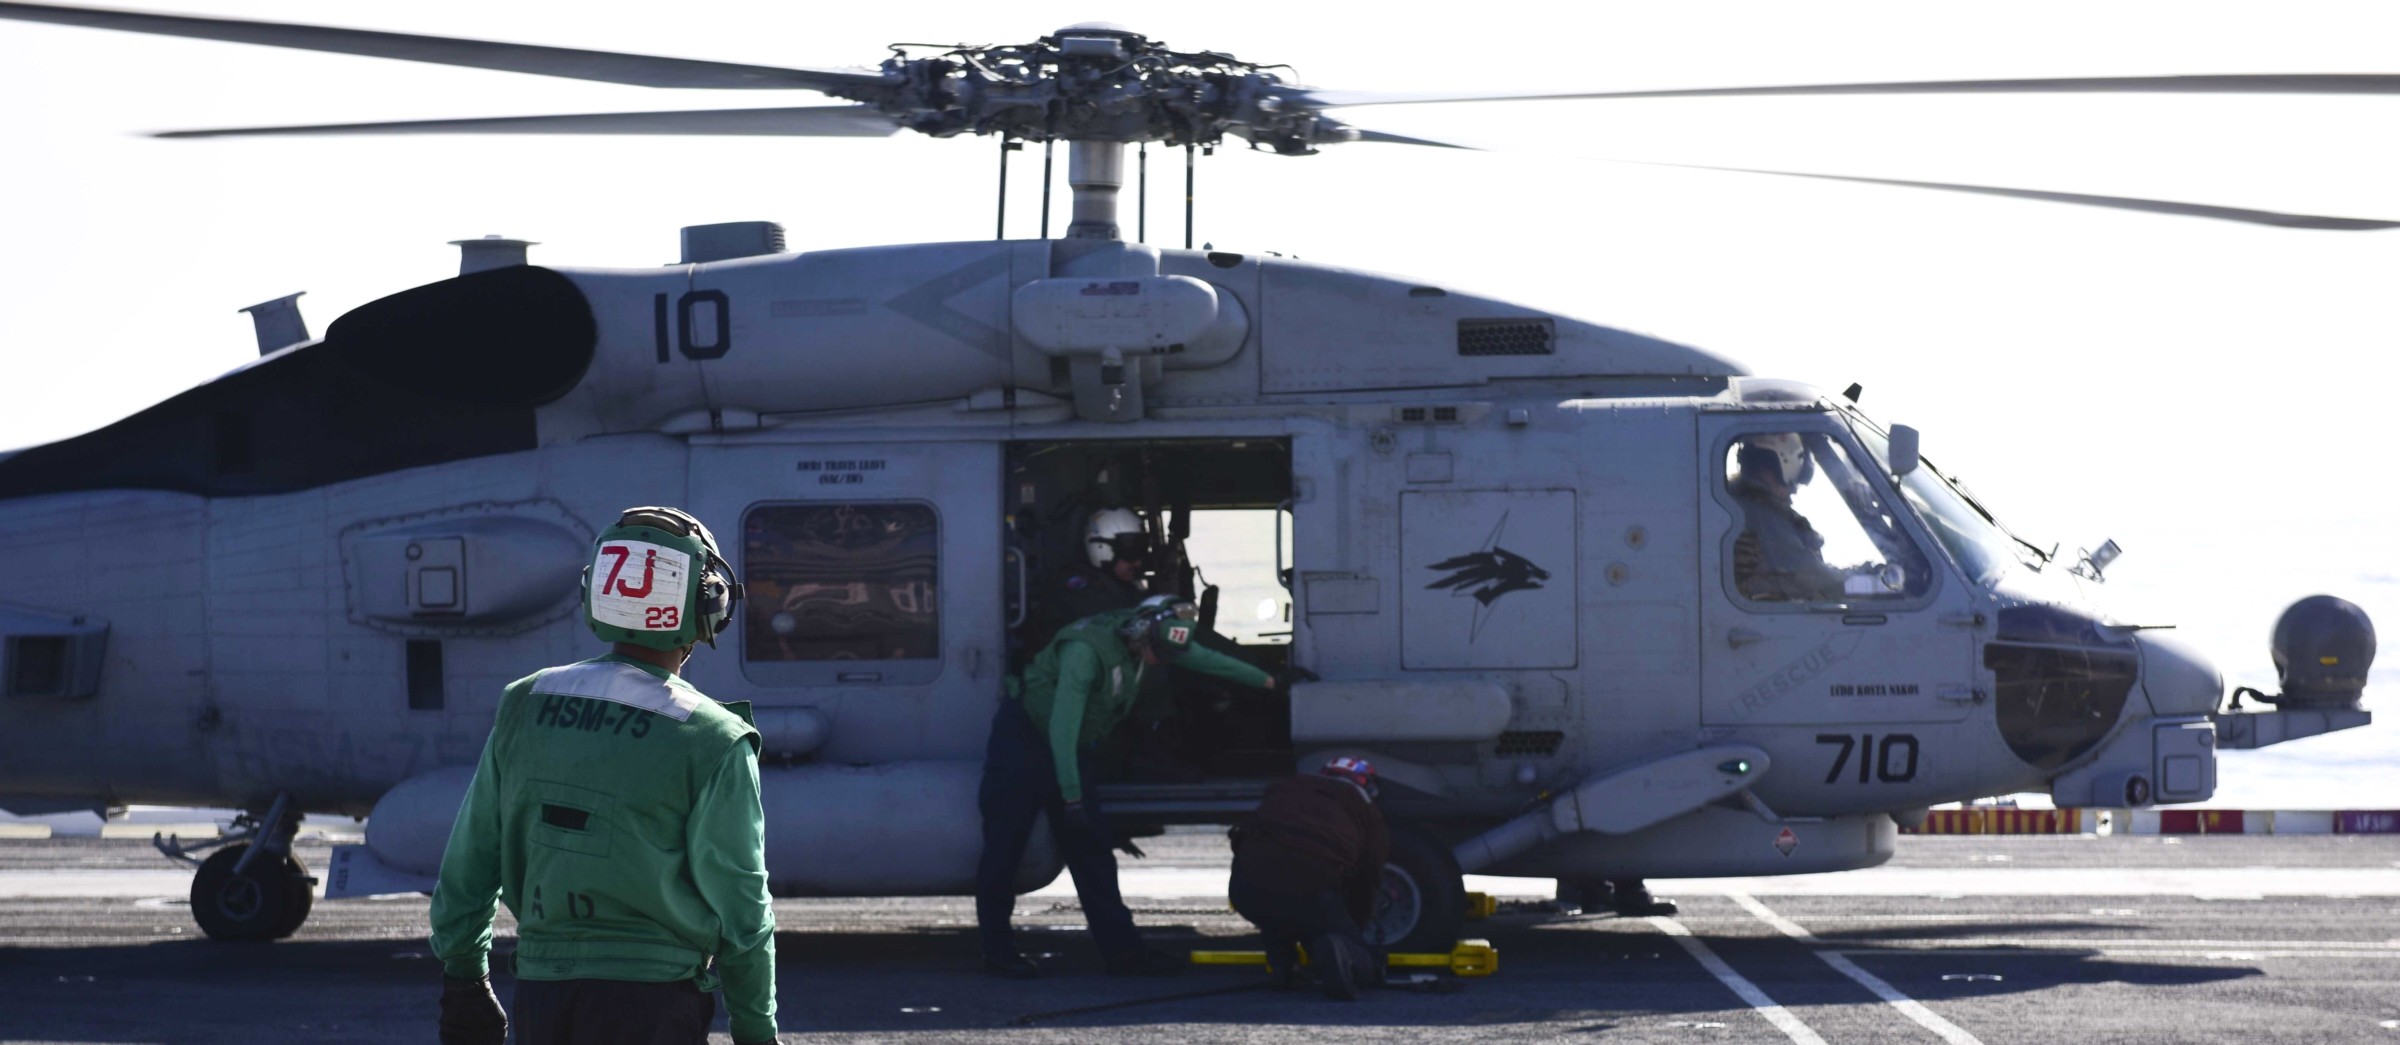 hsm-75 wolf pack helicopter maritime strike squadron mh-60r seahawk cvw-11 cvn-68 uss nimitz 2016 47